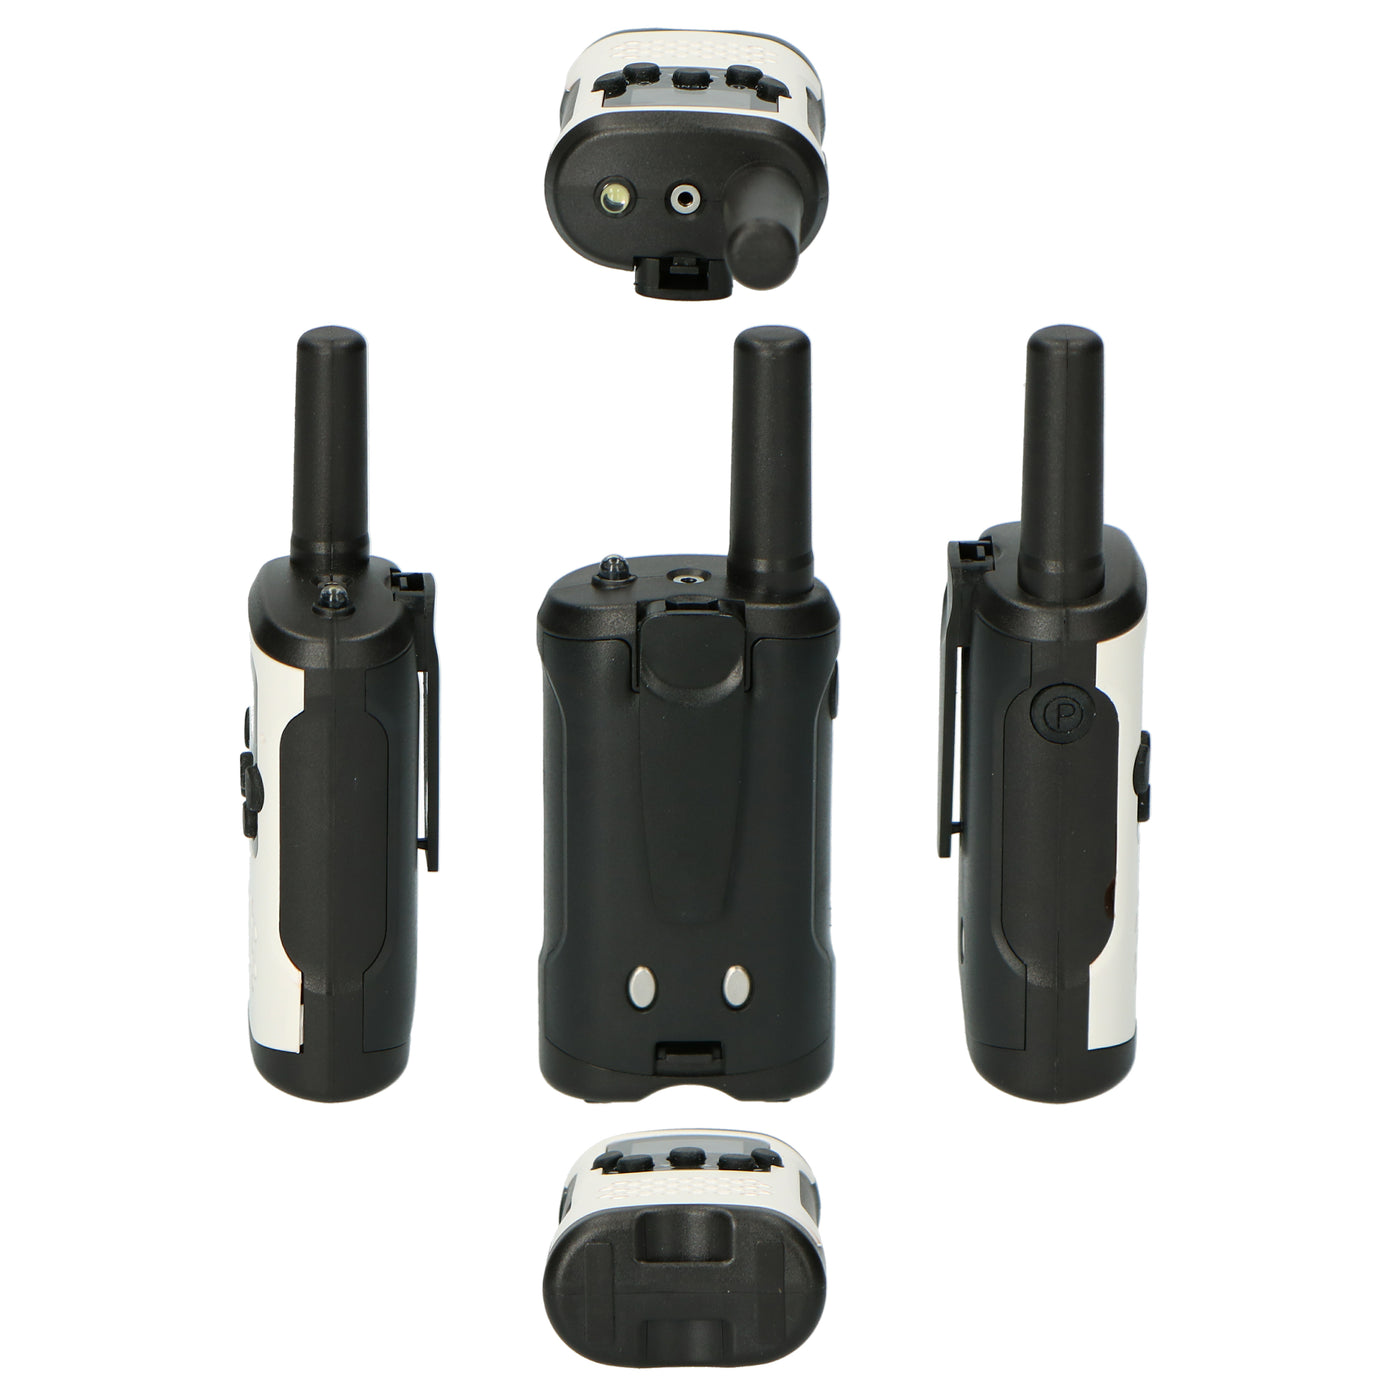 Alecto FR-175 QUADSET - Set van 4 walkie talkies - tot 7 kilometer bereik, wit/zwart